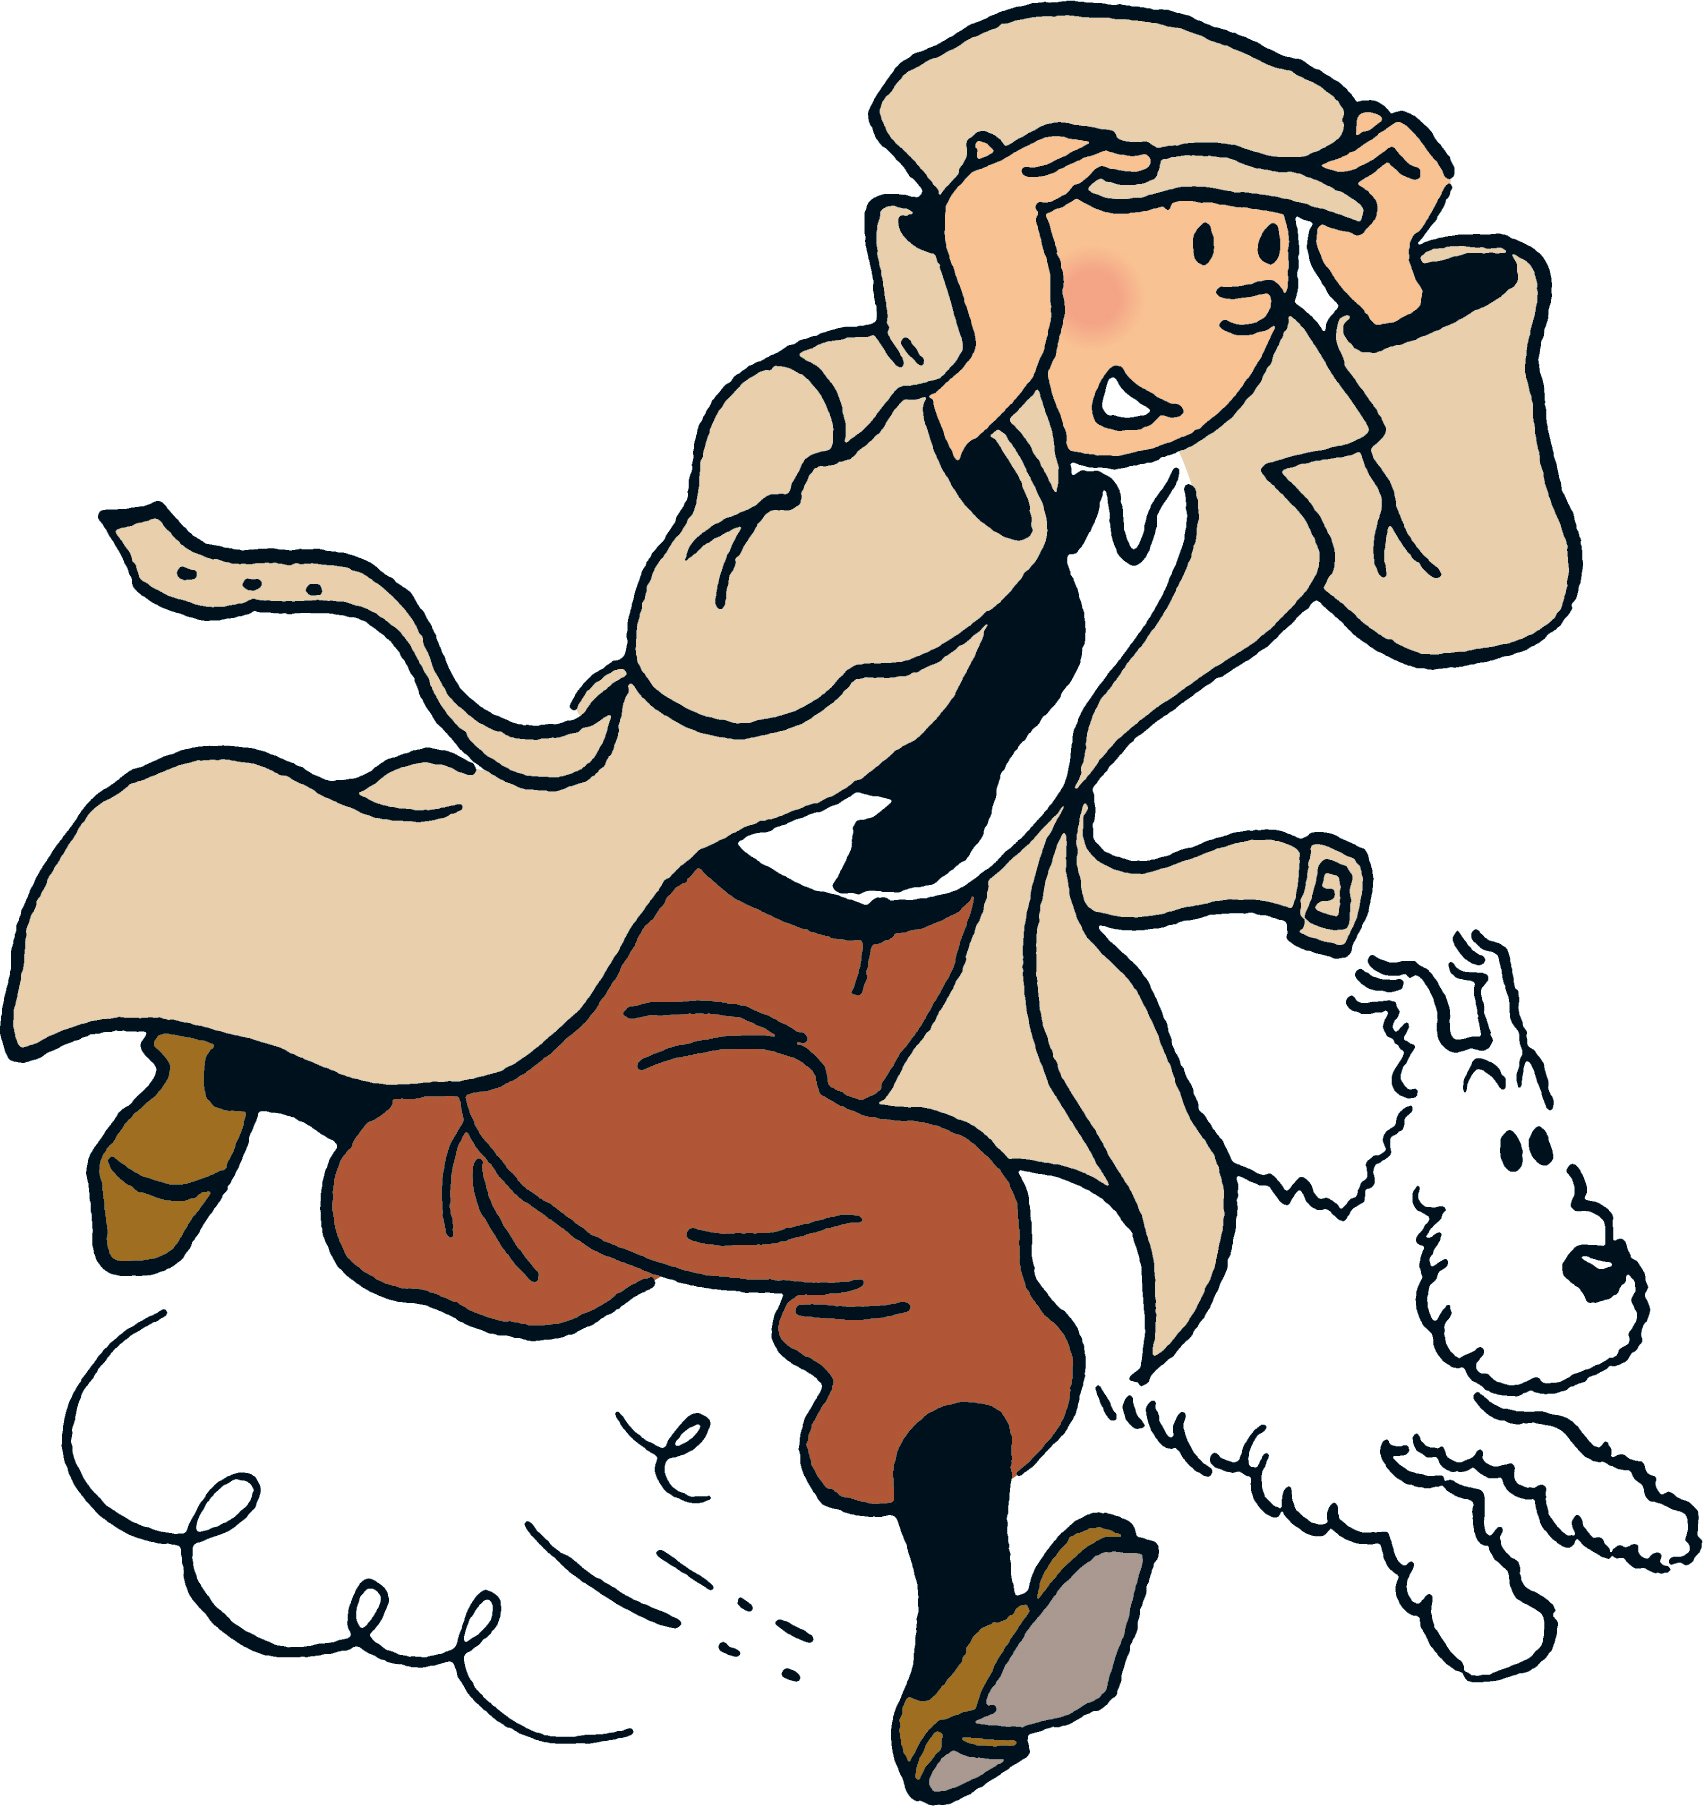 Tintin & Herge